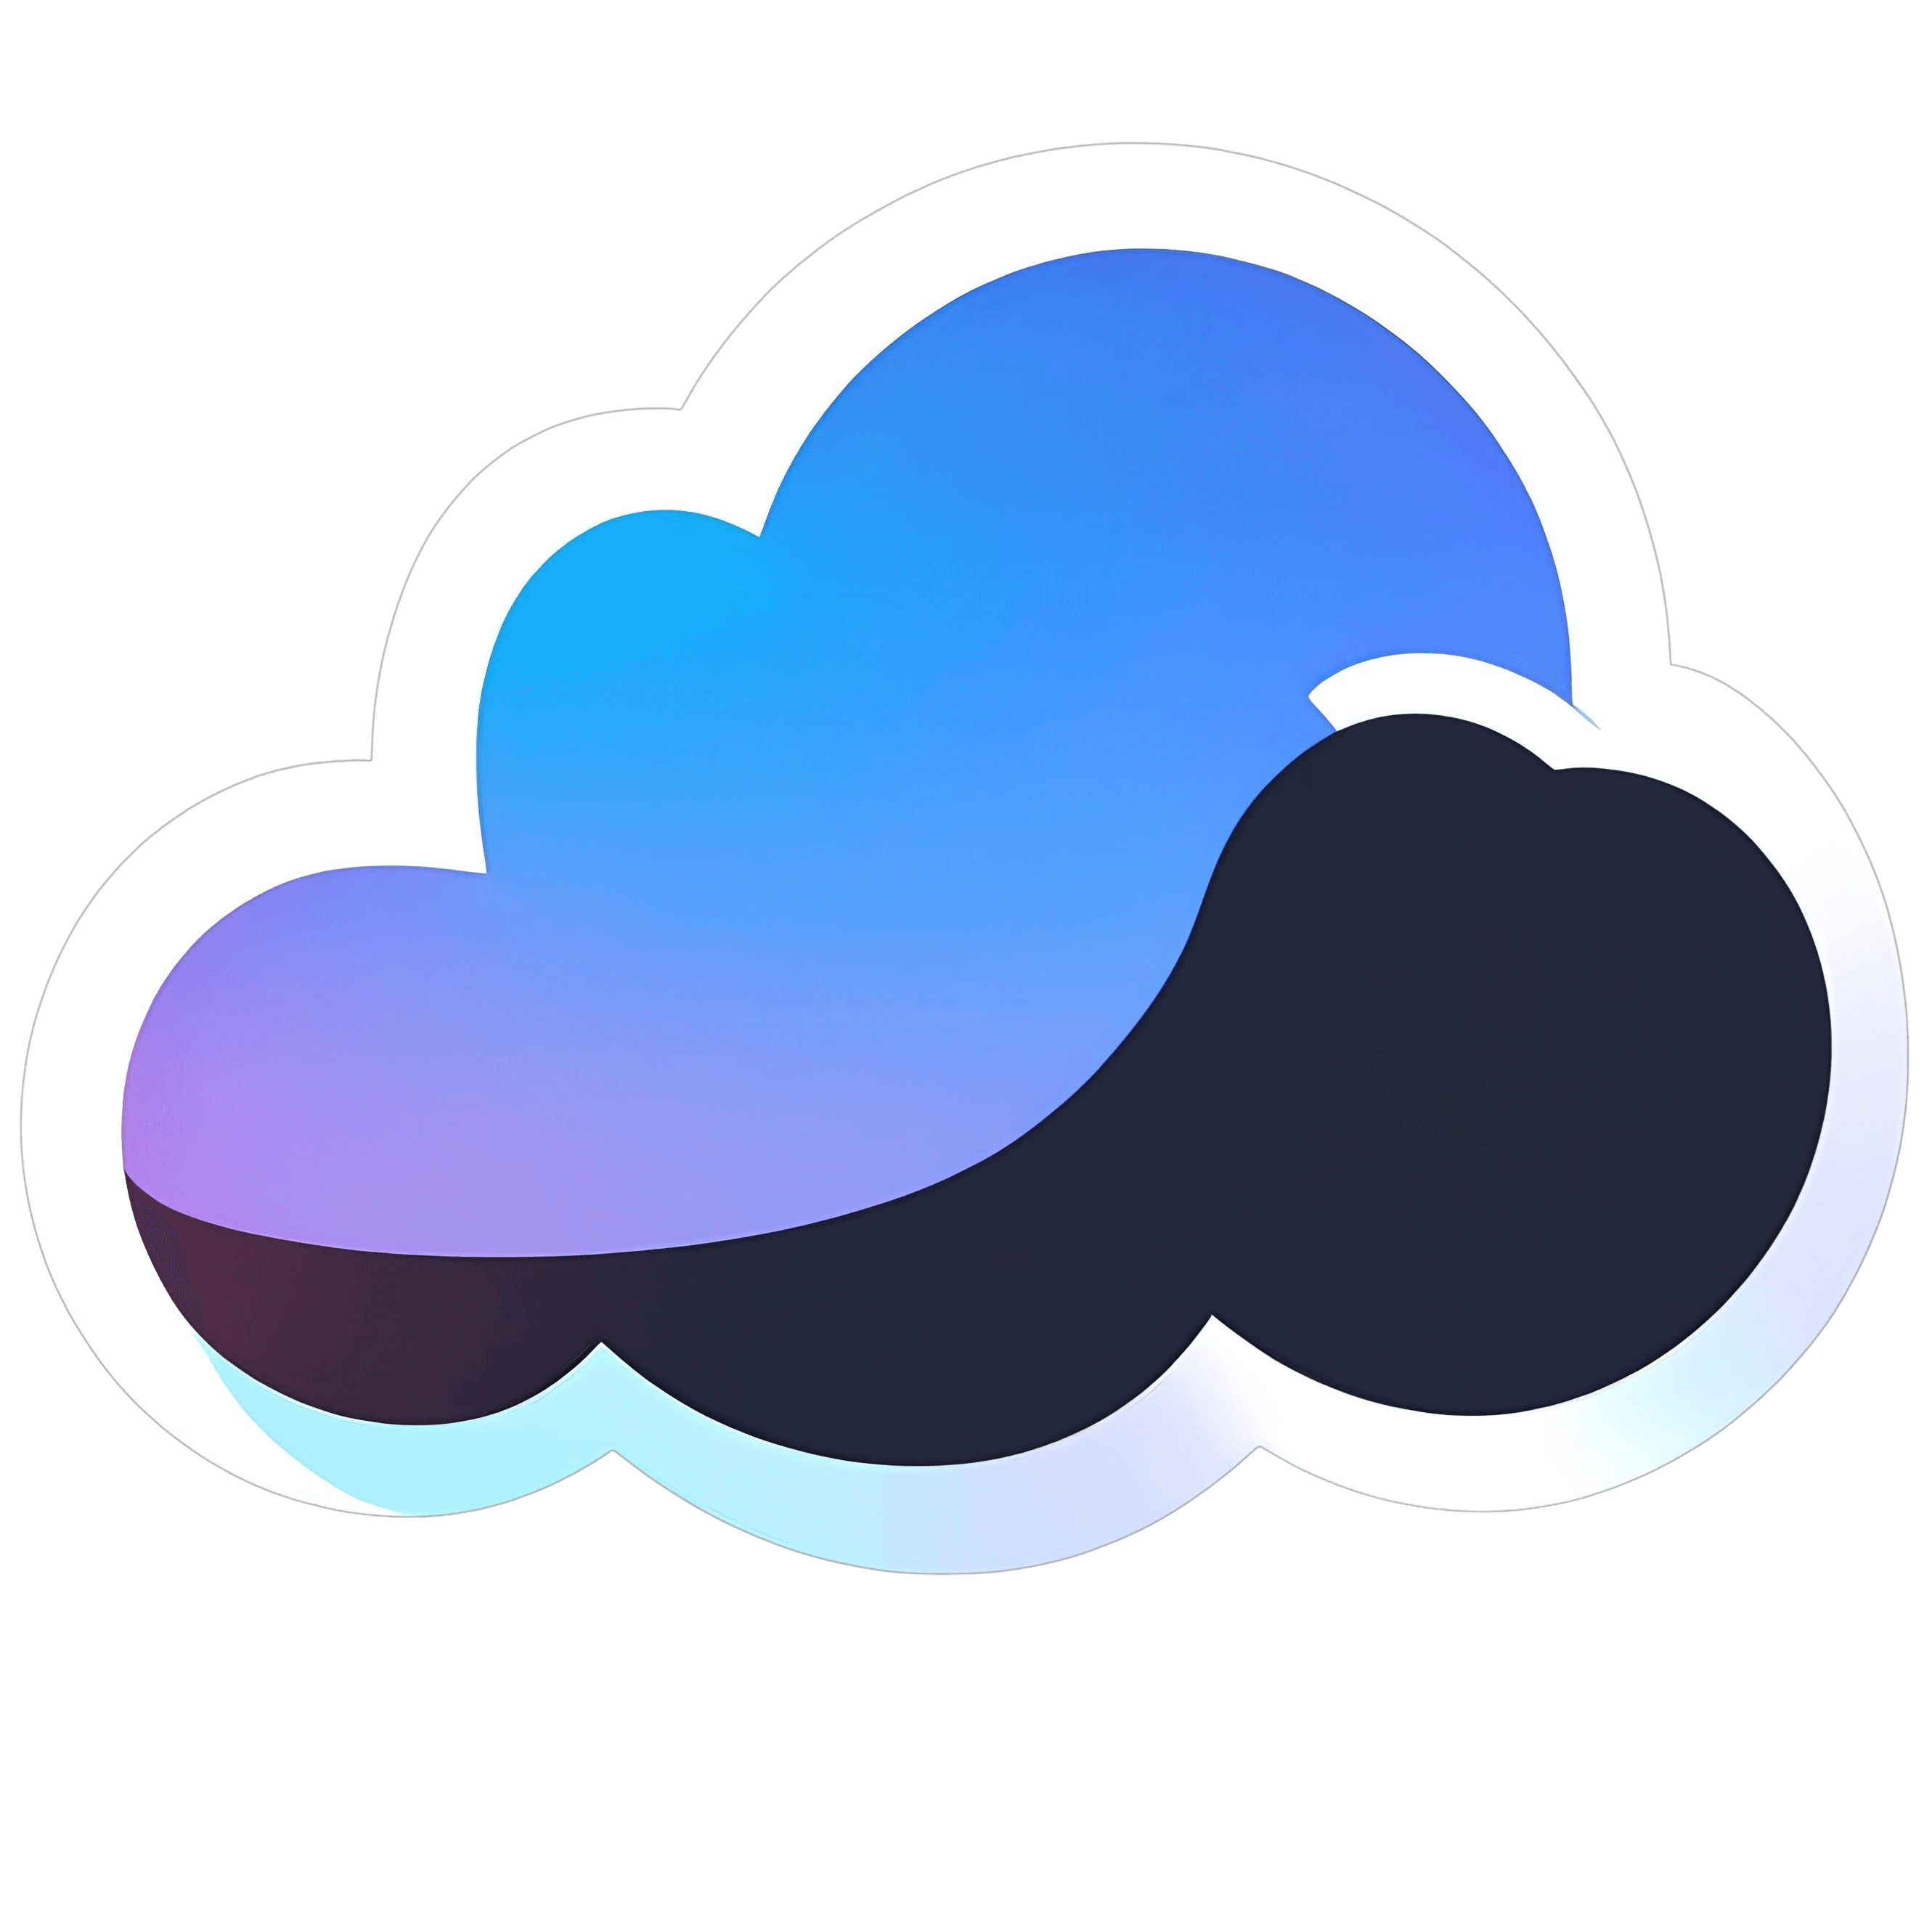 The logo of CloudCord (A simple blue/purple cloud)